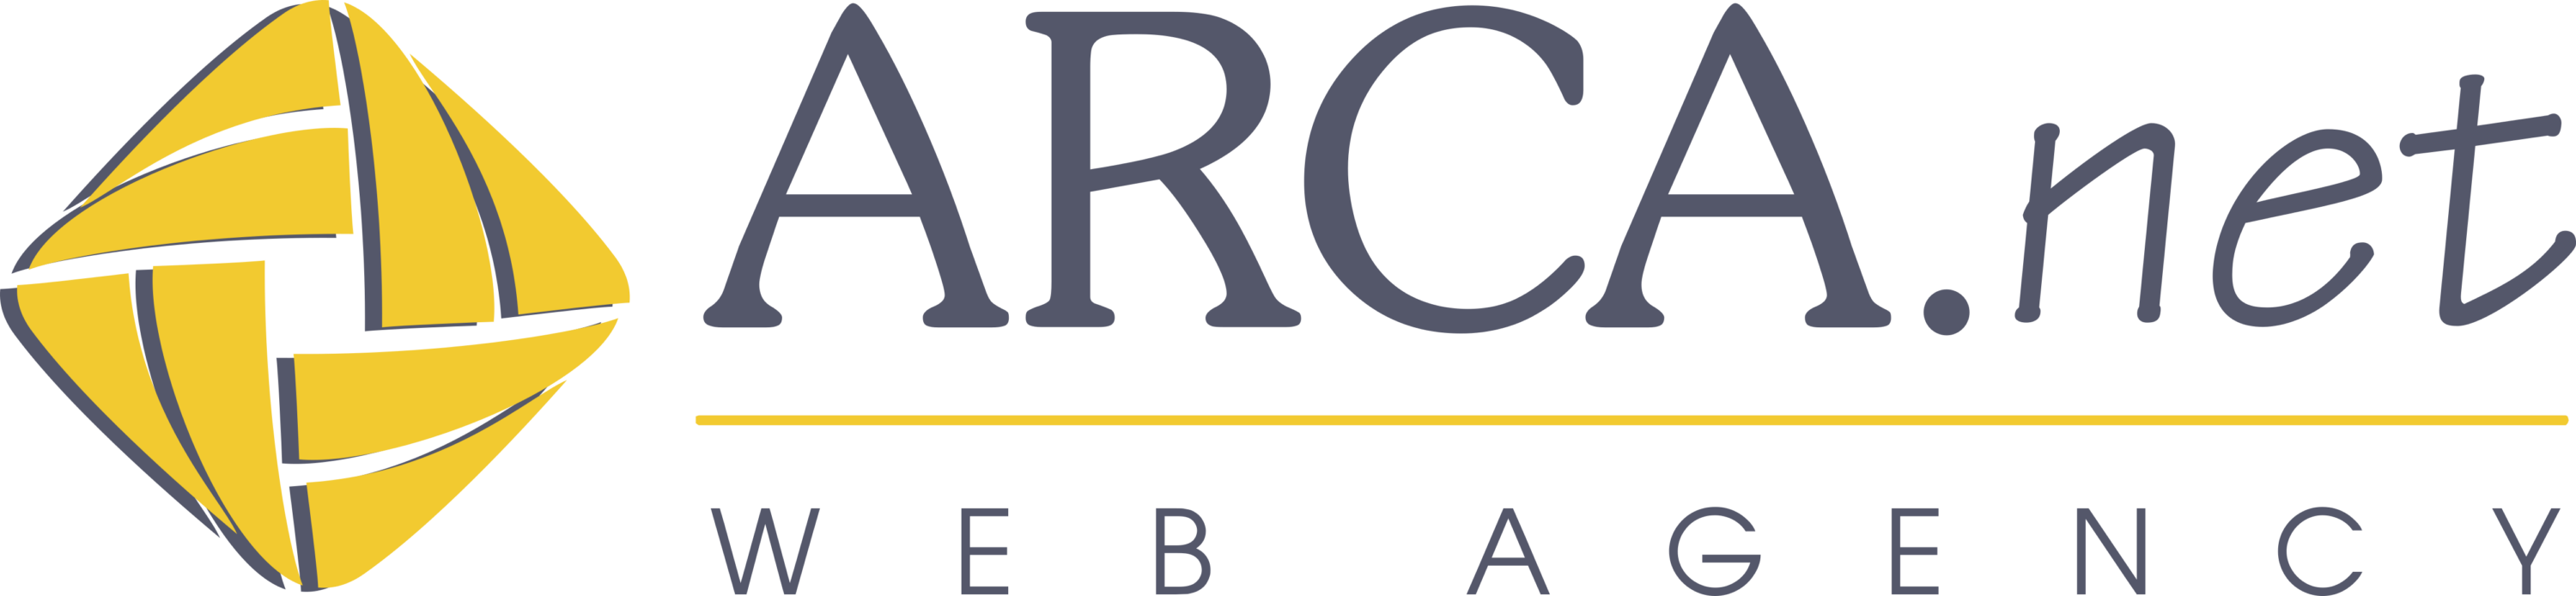 Arca.net Logo